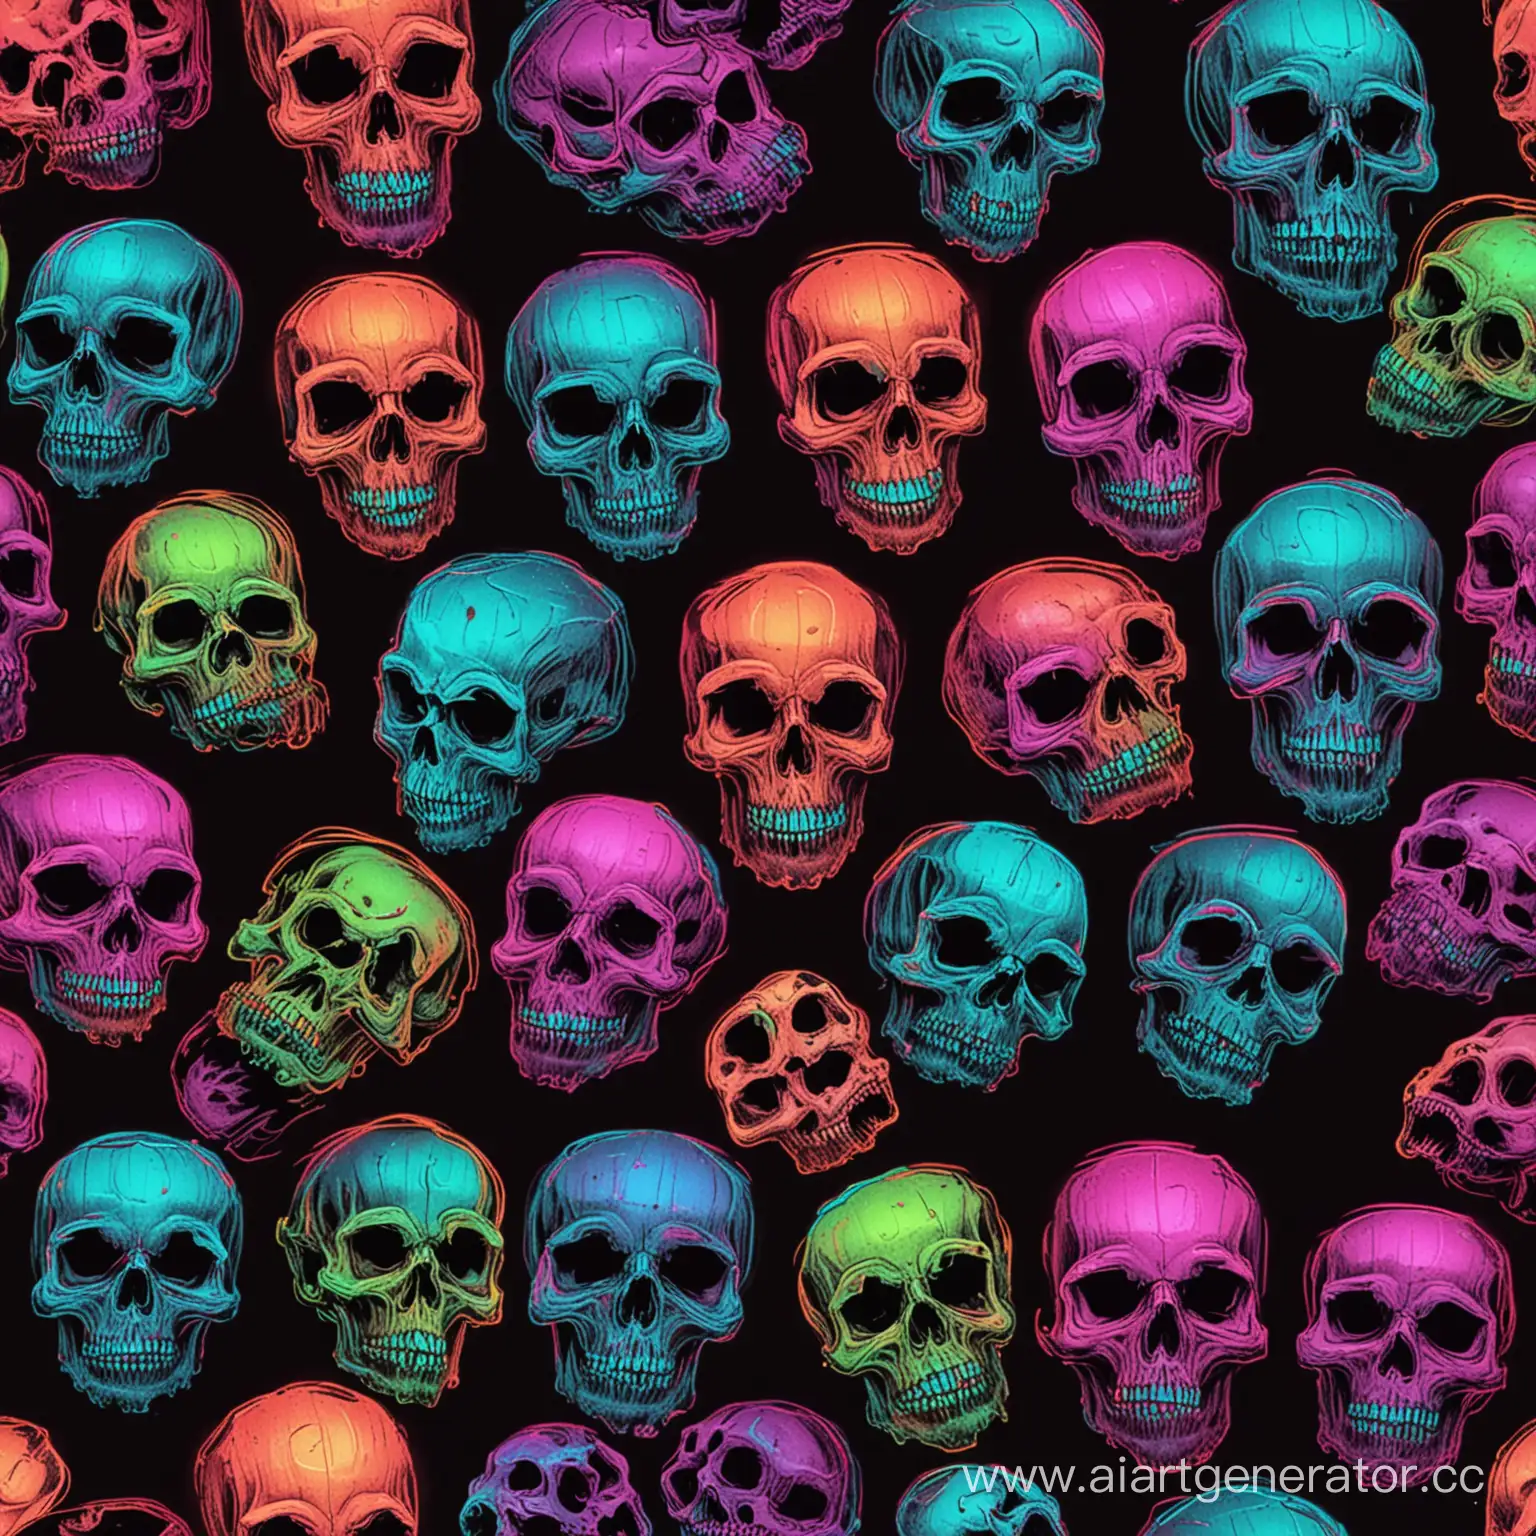 Neon-Skulls-Illuminated-in-Vivid-Colors